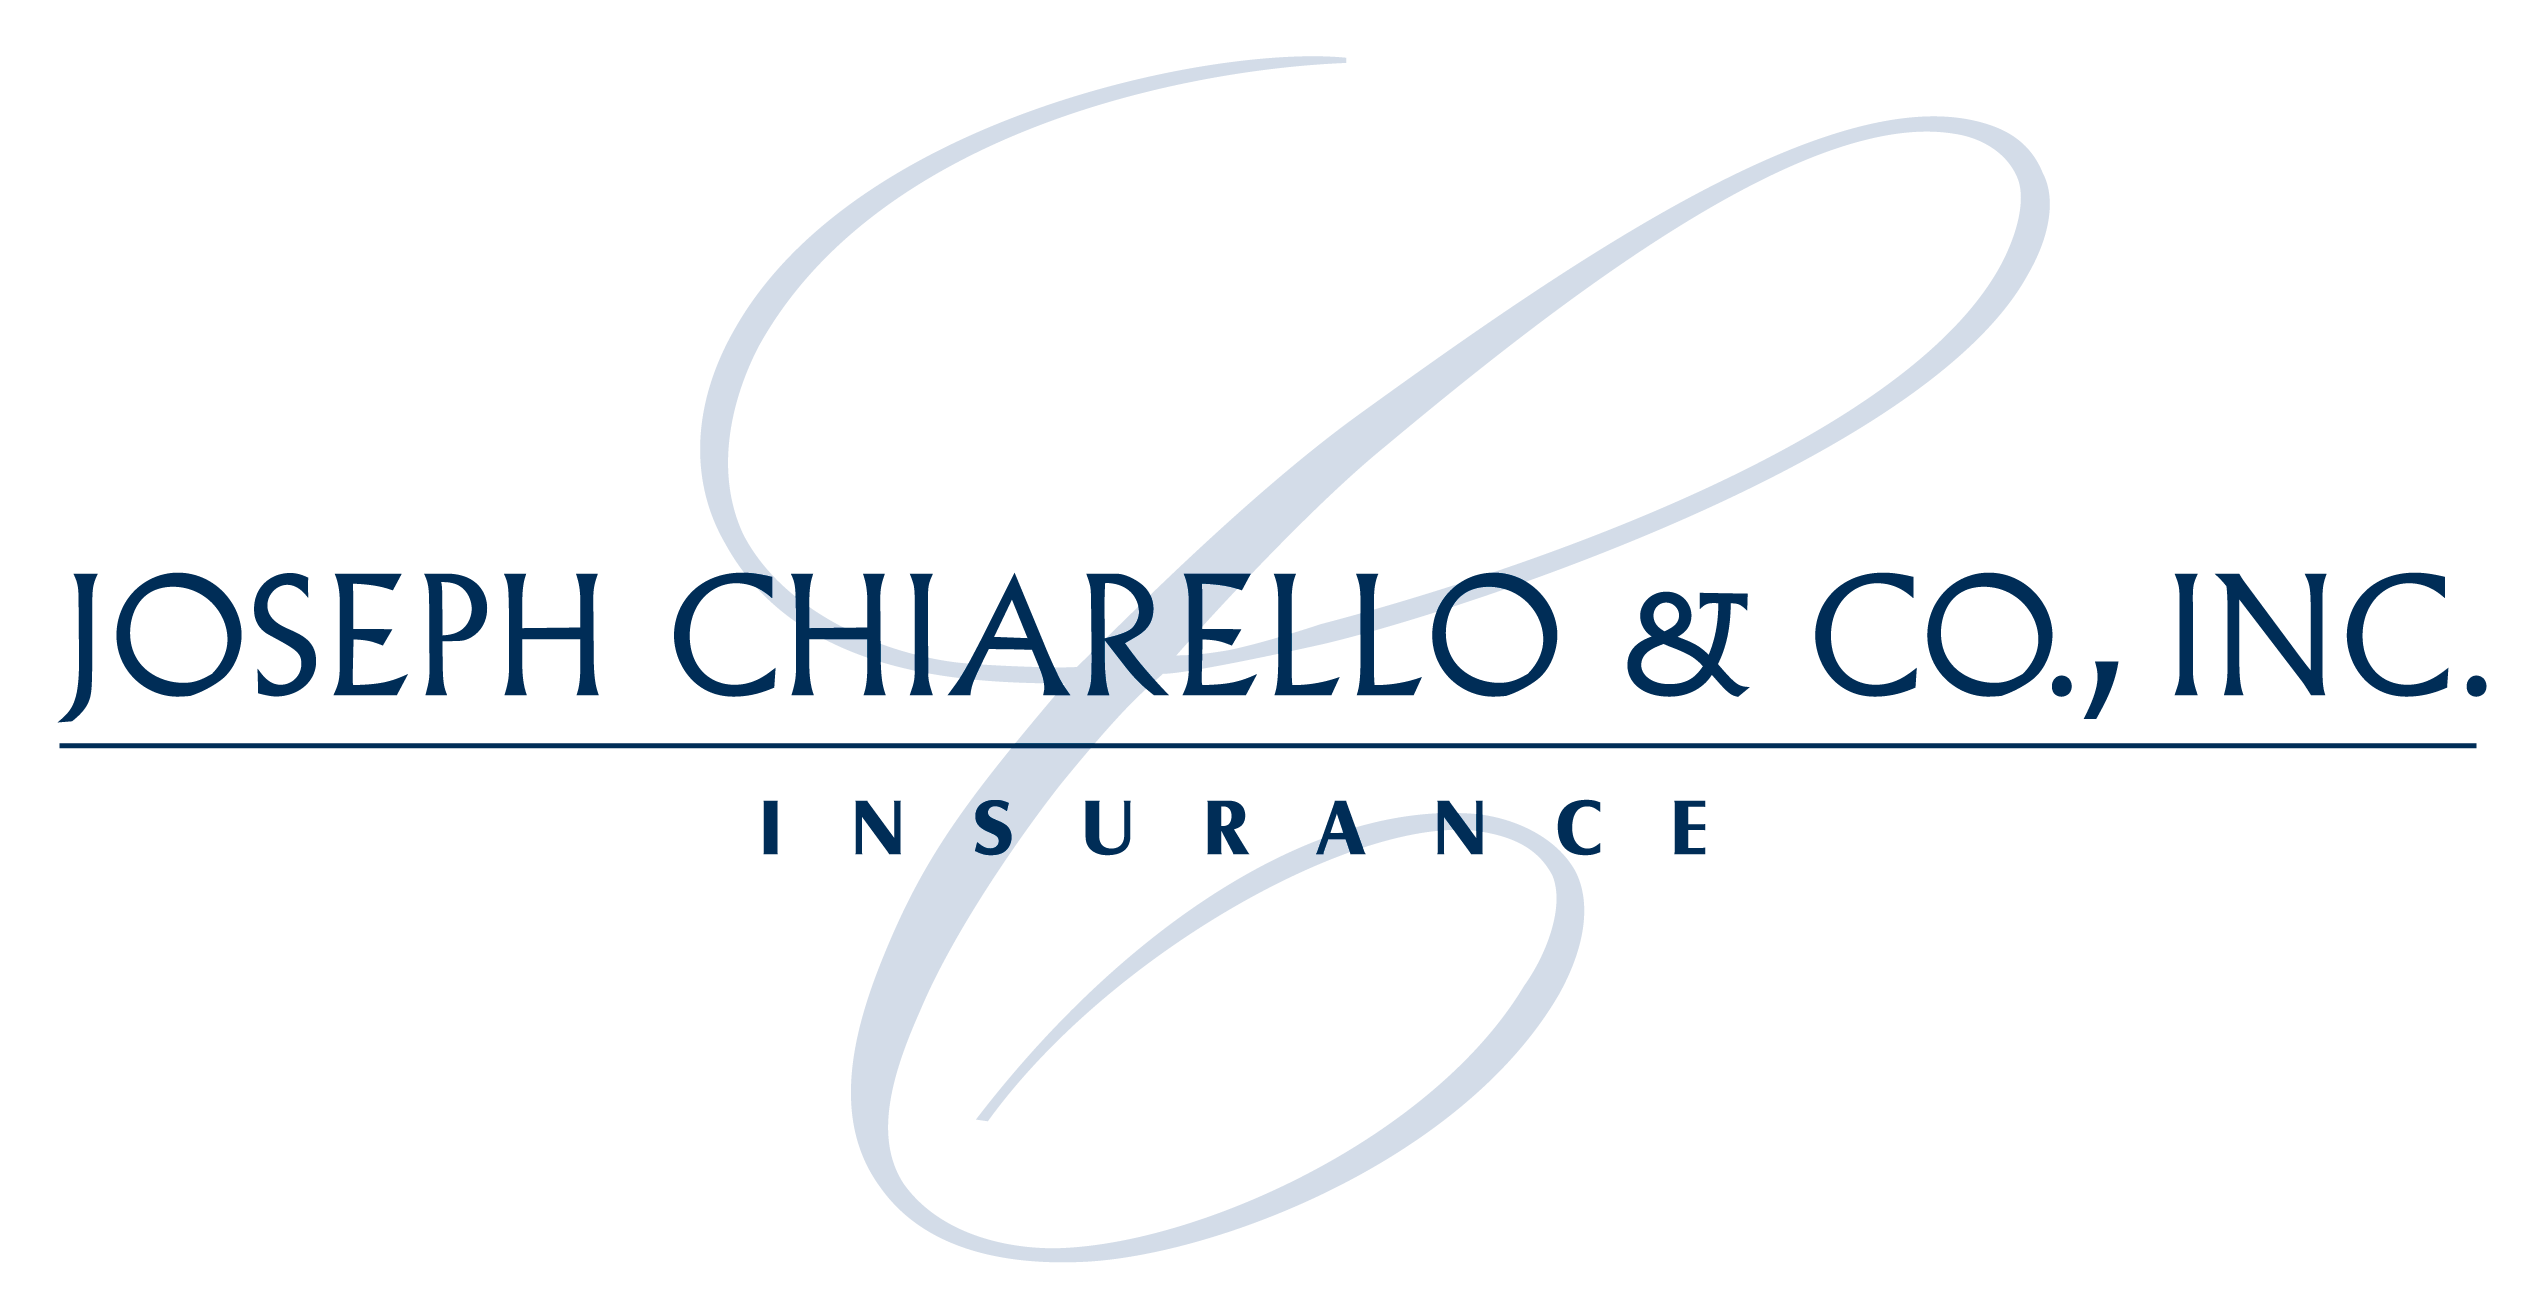 Bronze sponsor Joseph Chiarello & Co., Inc logo